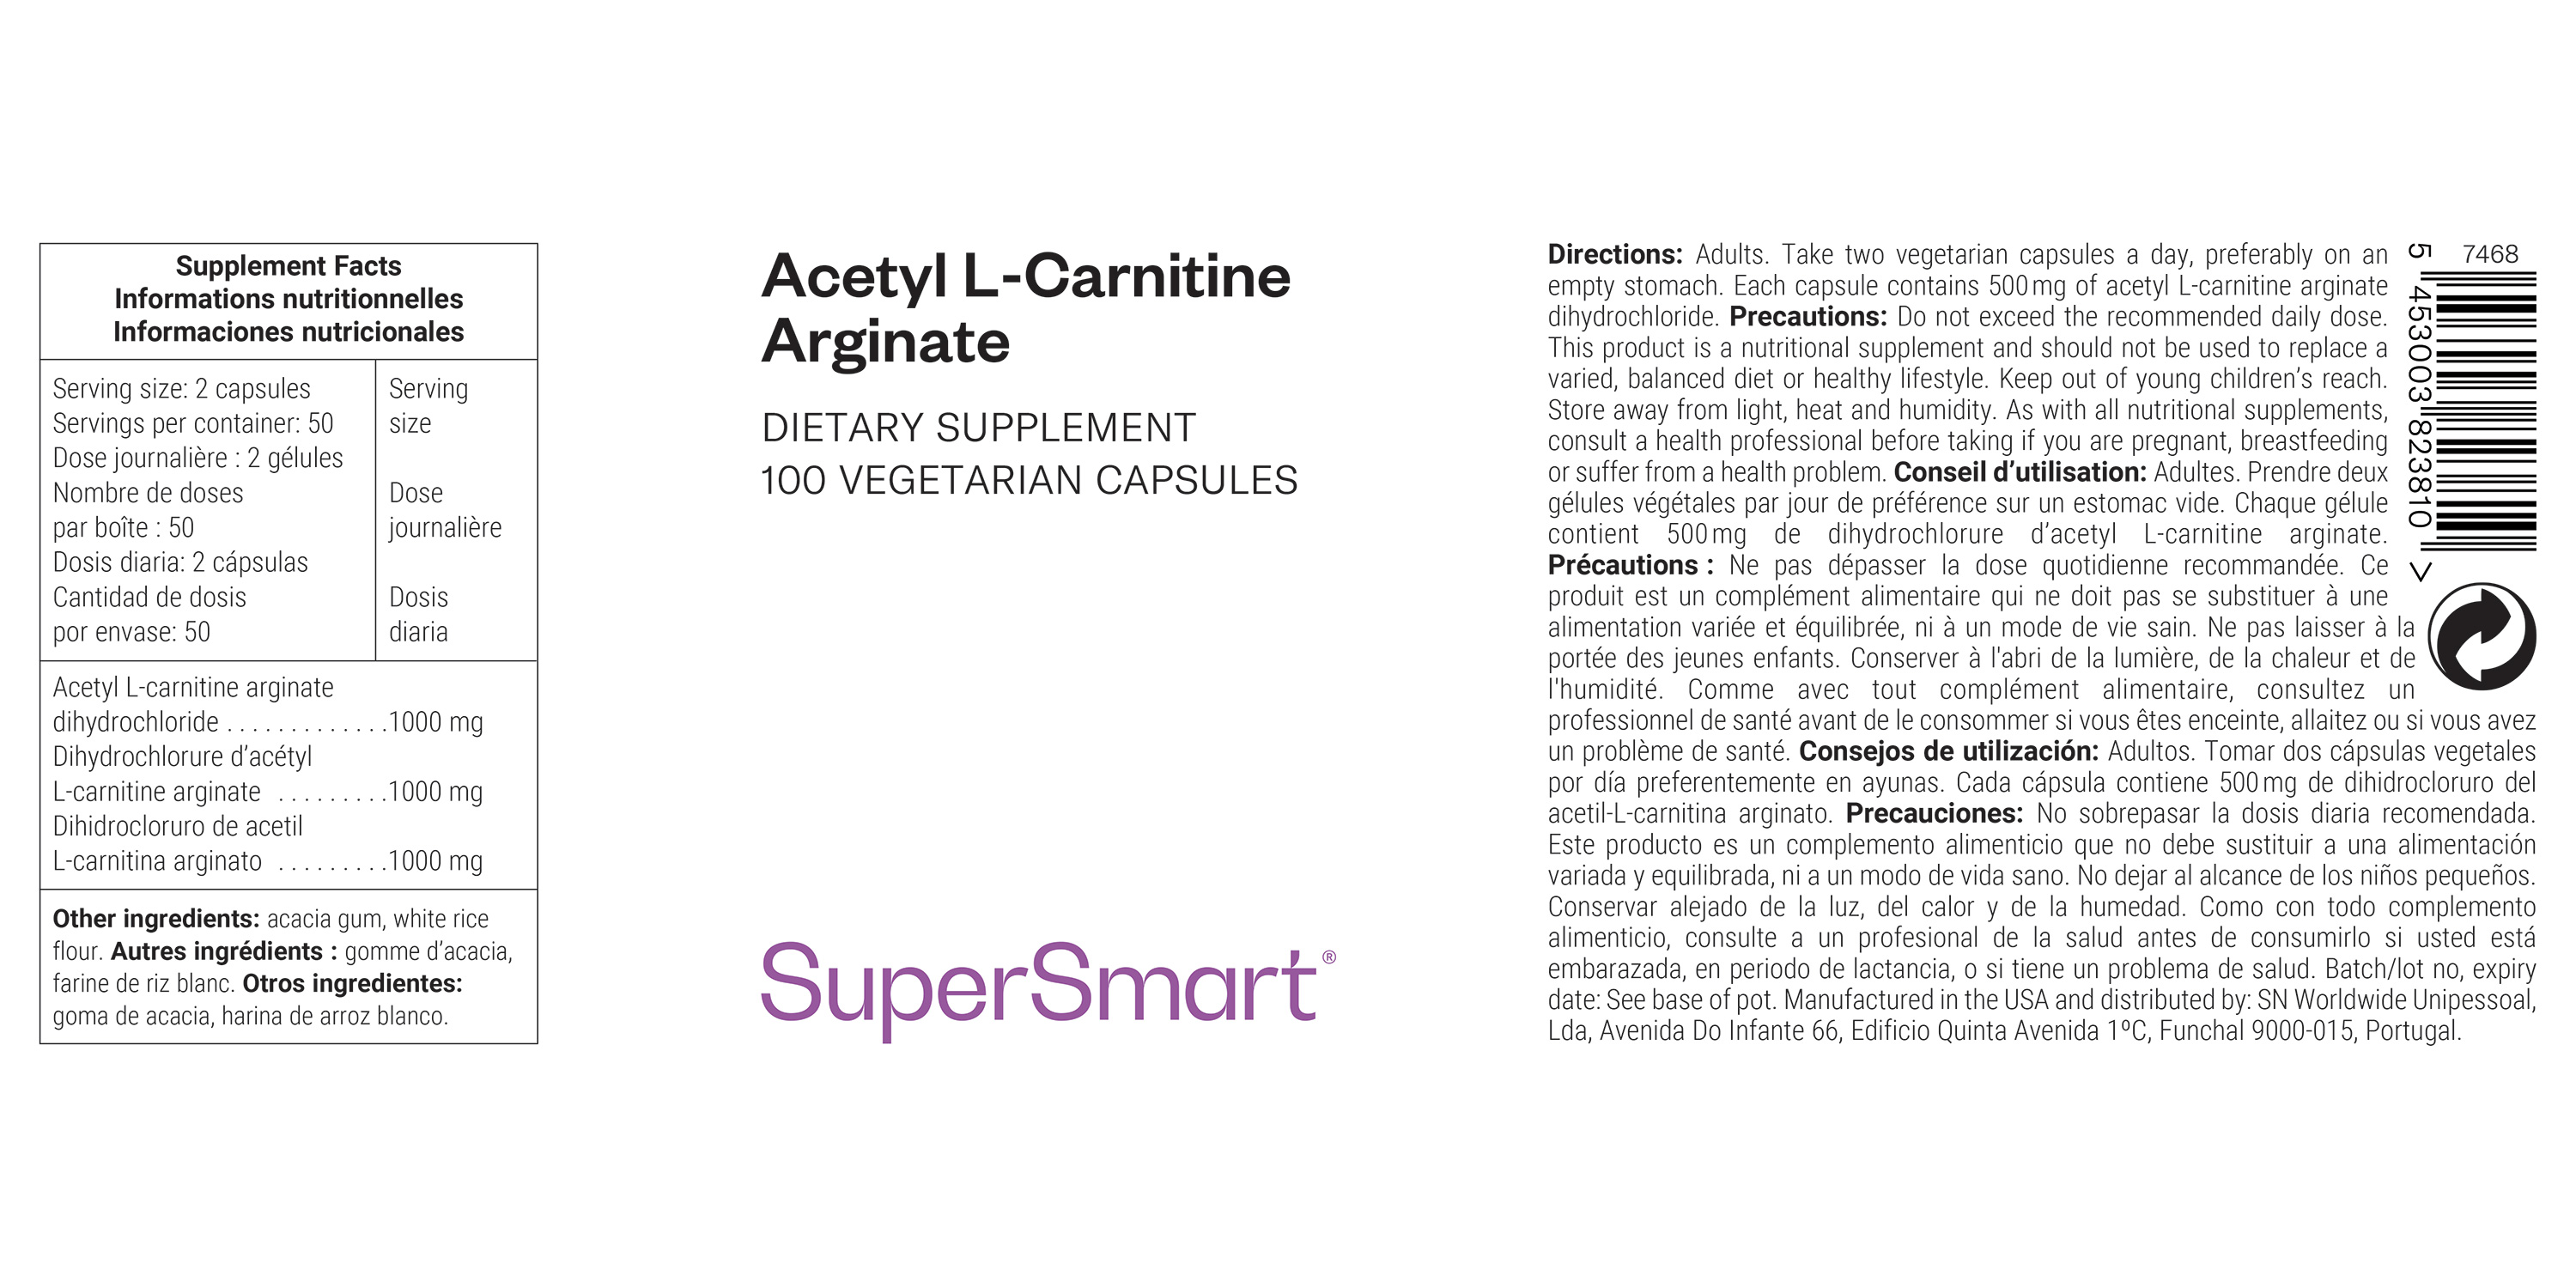 Acetyl L-Carnitine Arginate Supplement